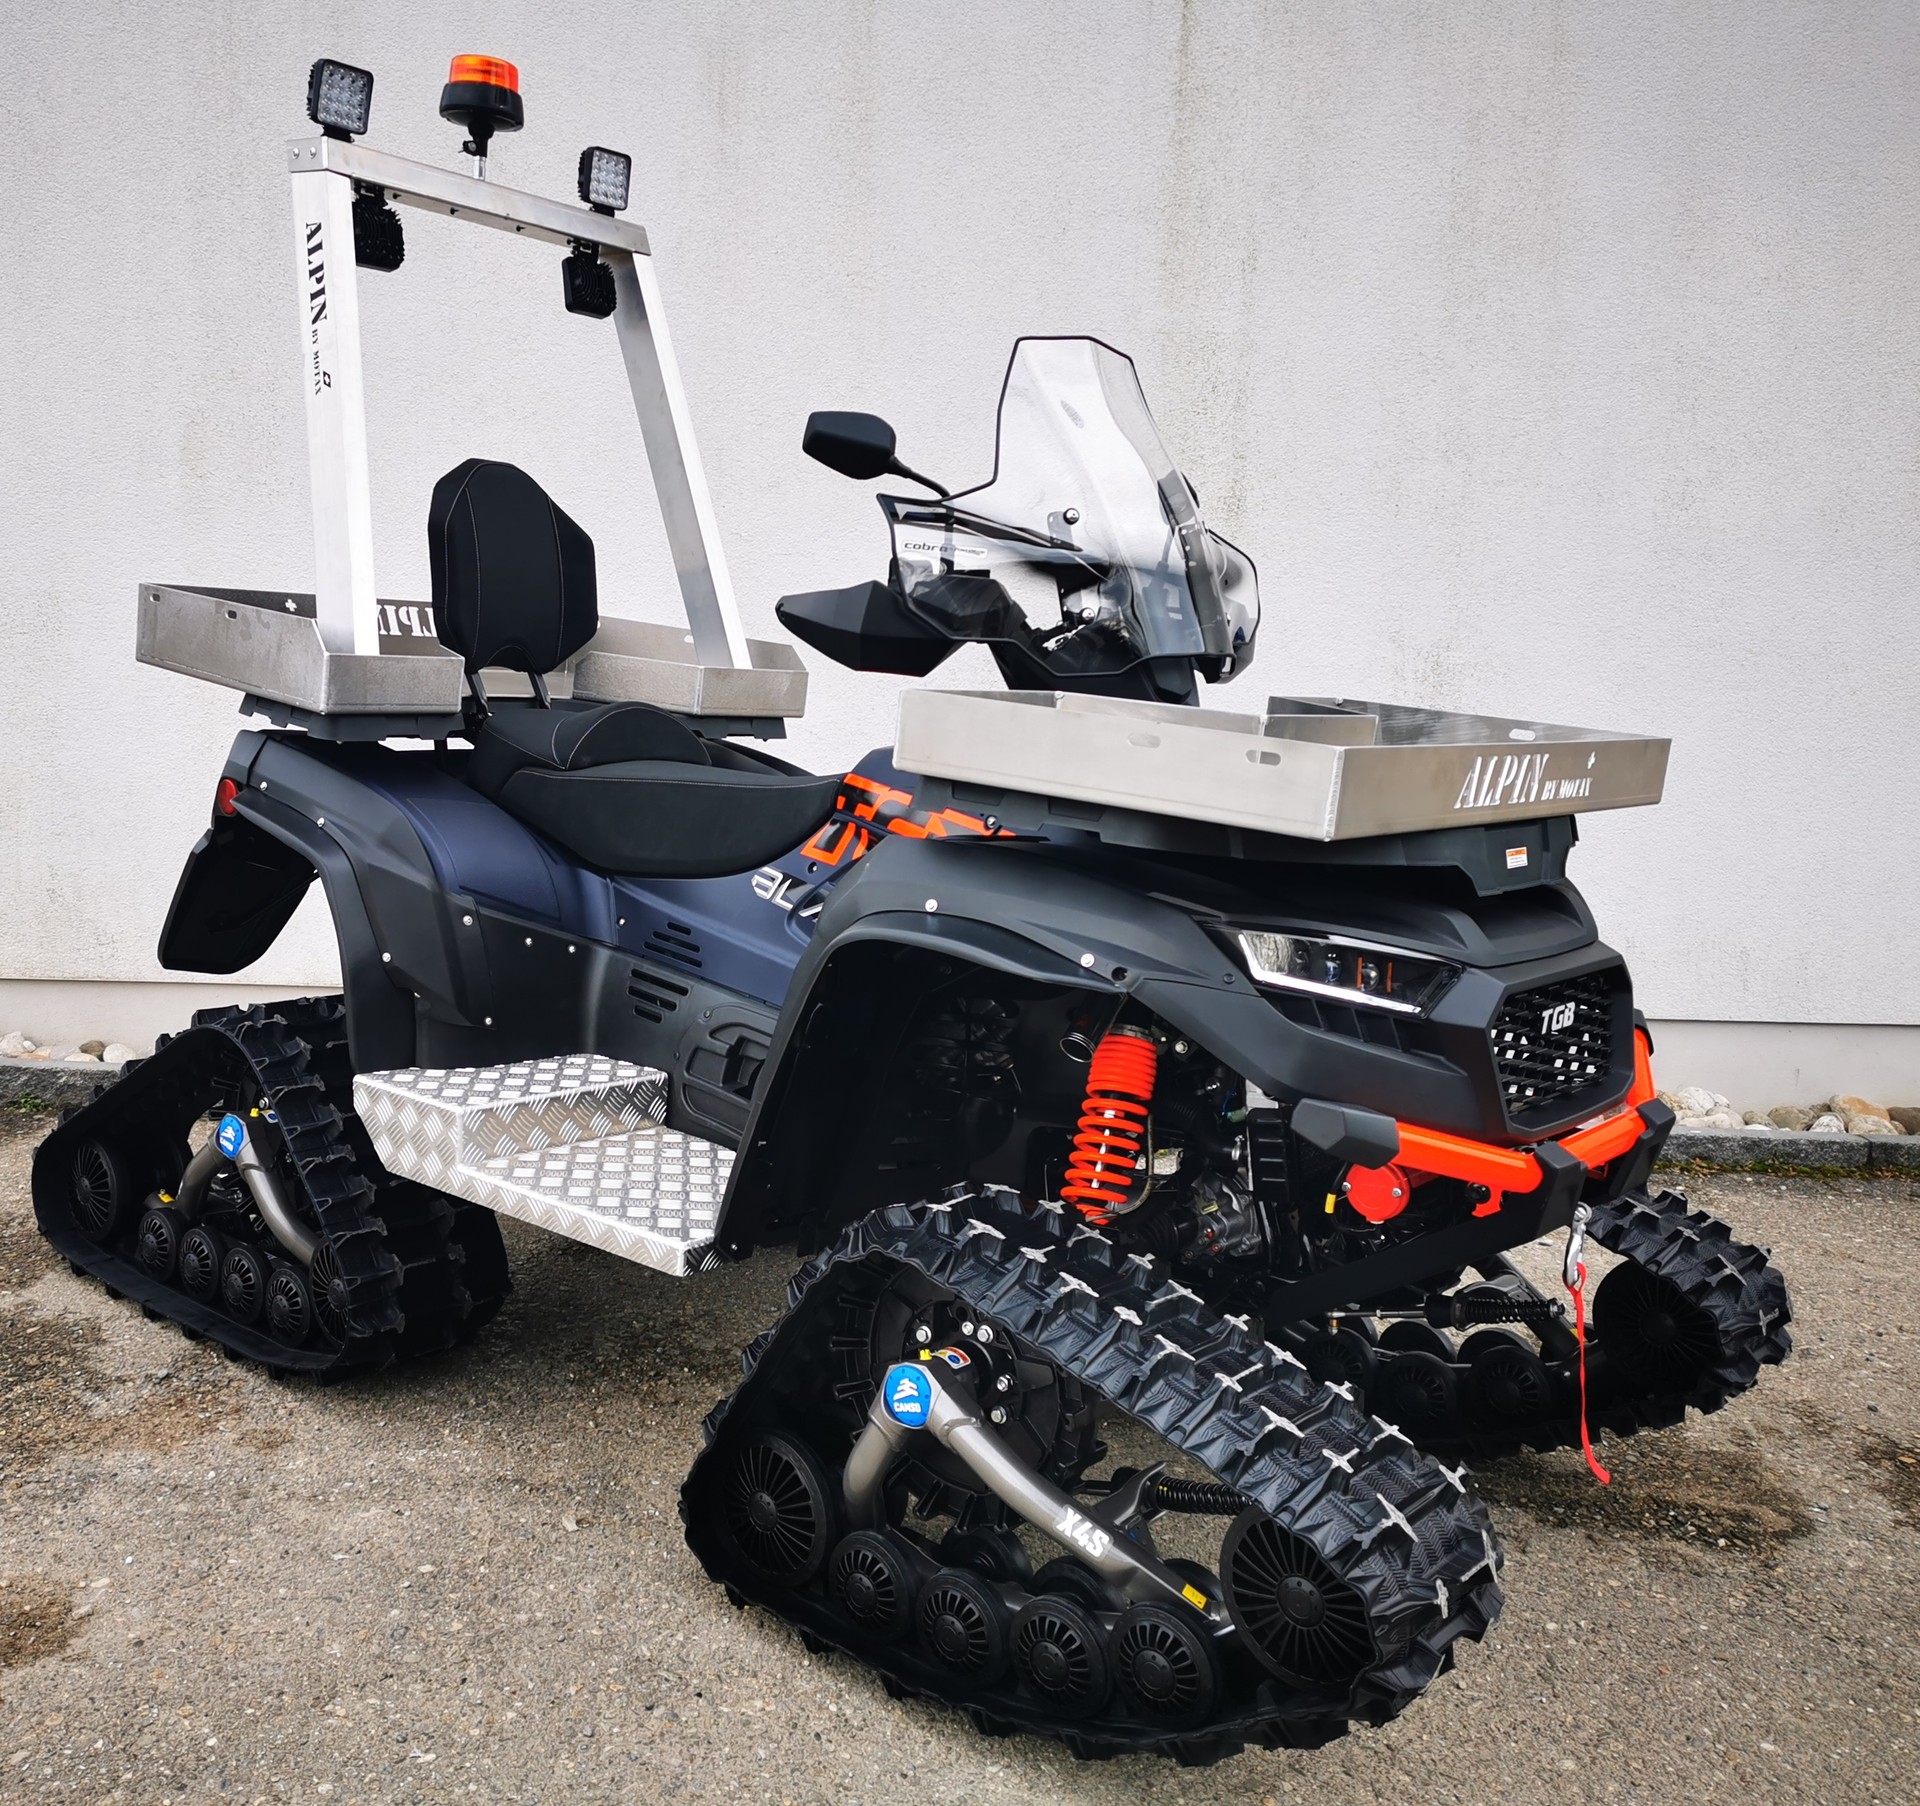 TGB ATV – fr, Motax GmbH